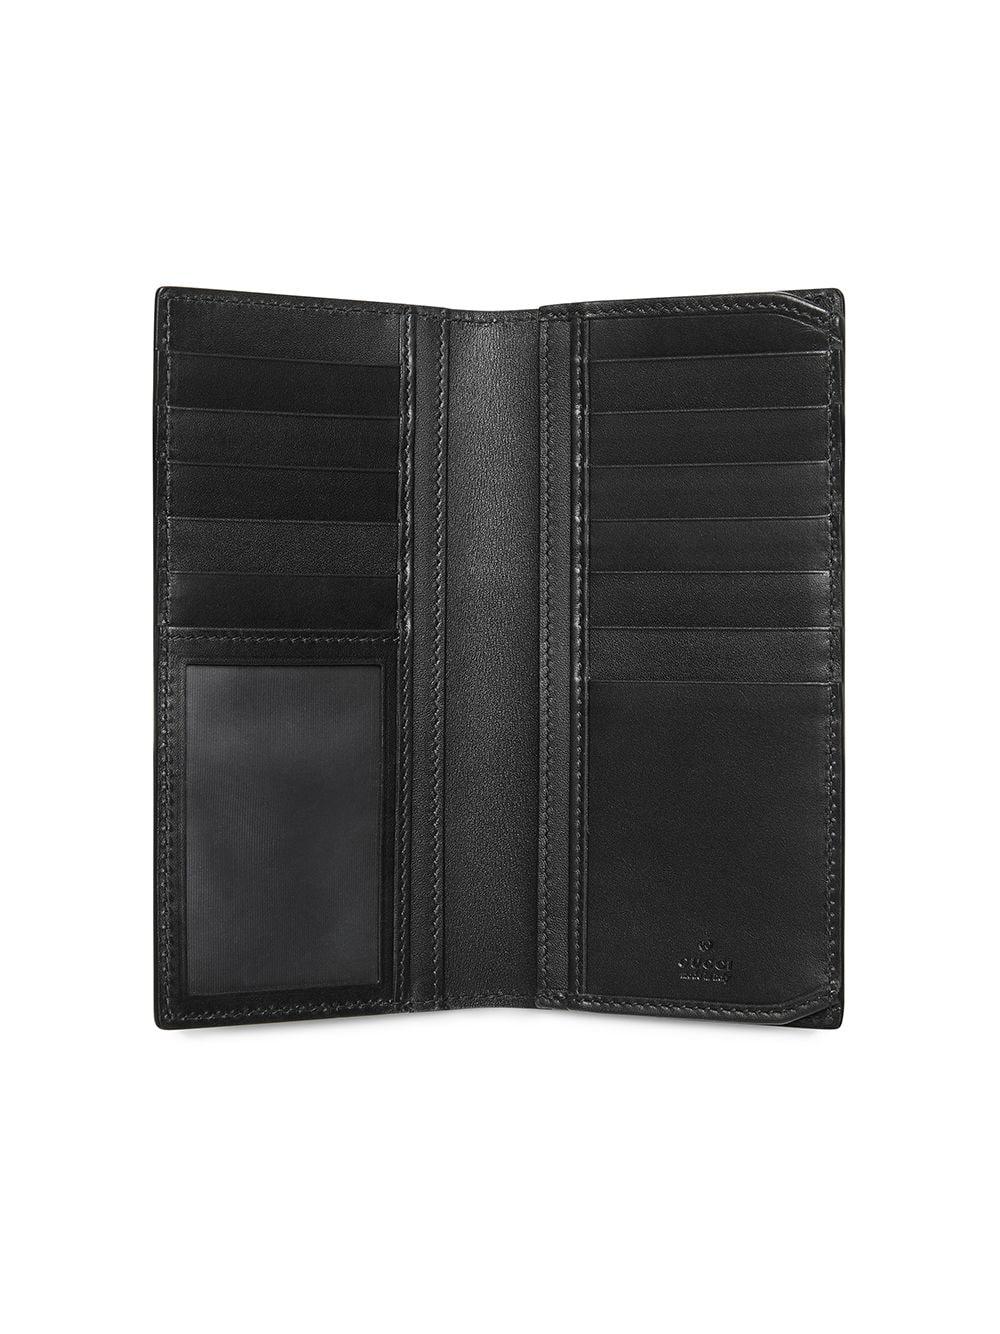 Gucci Web GG Supreme Long Wallet in Black for Men